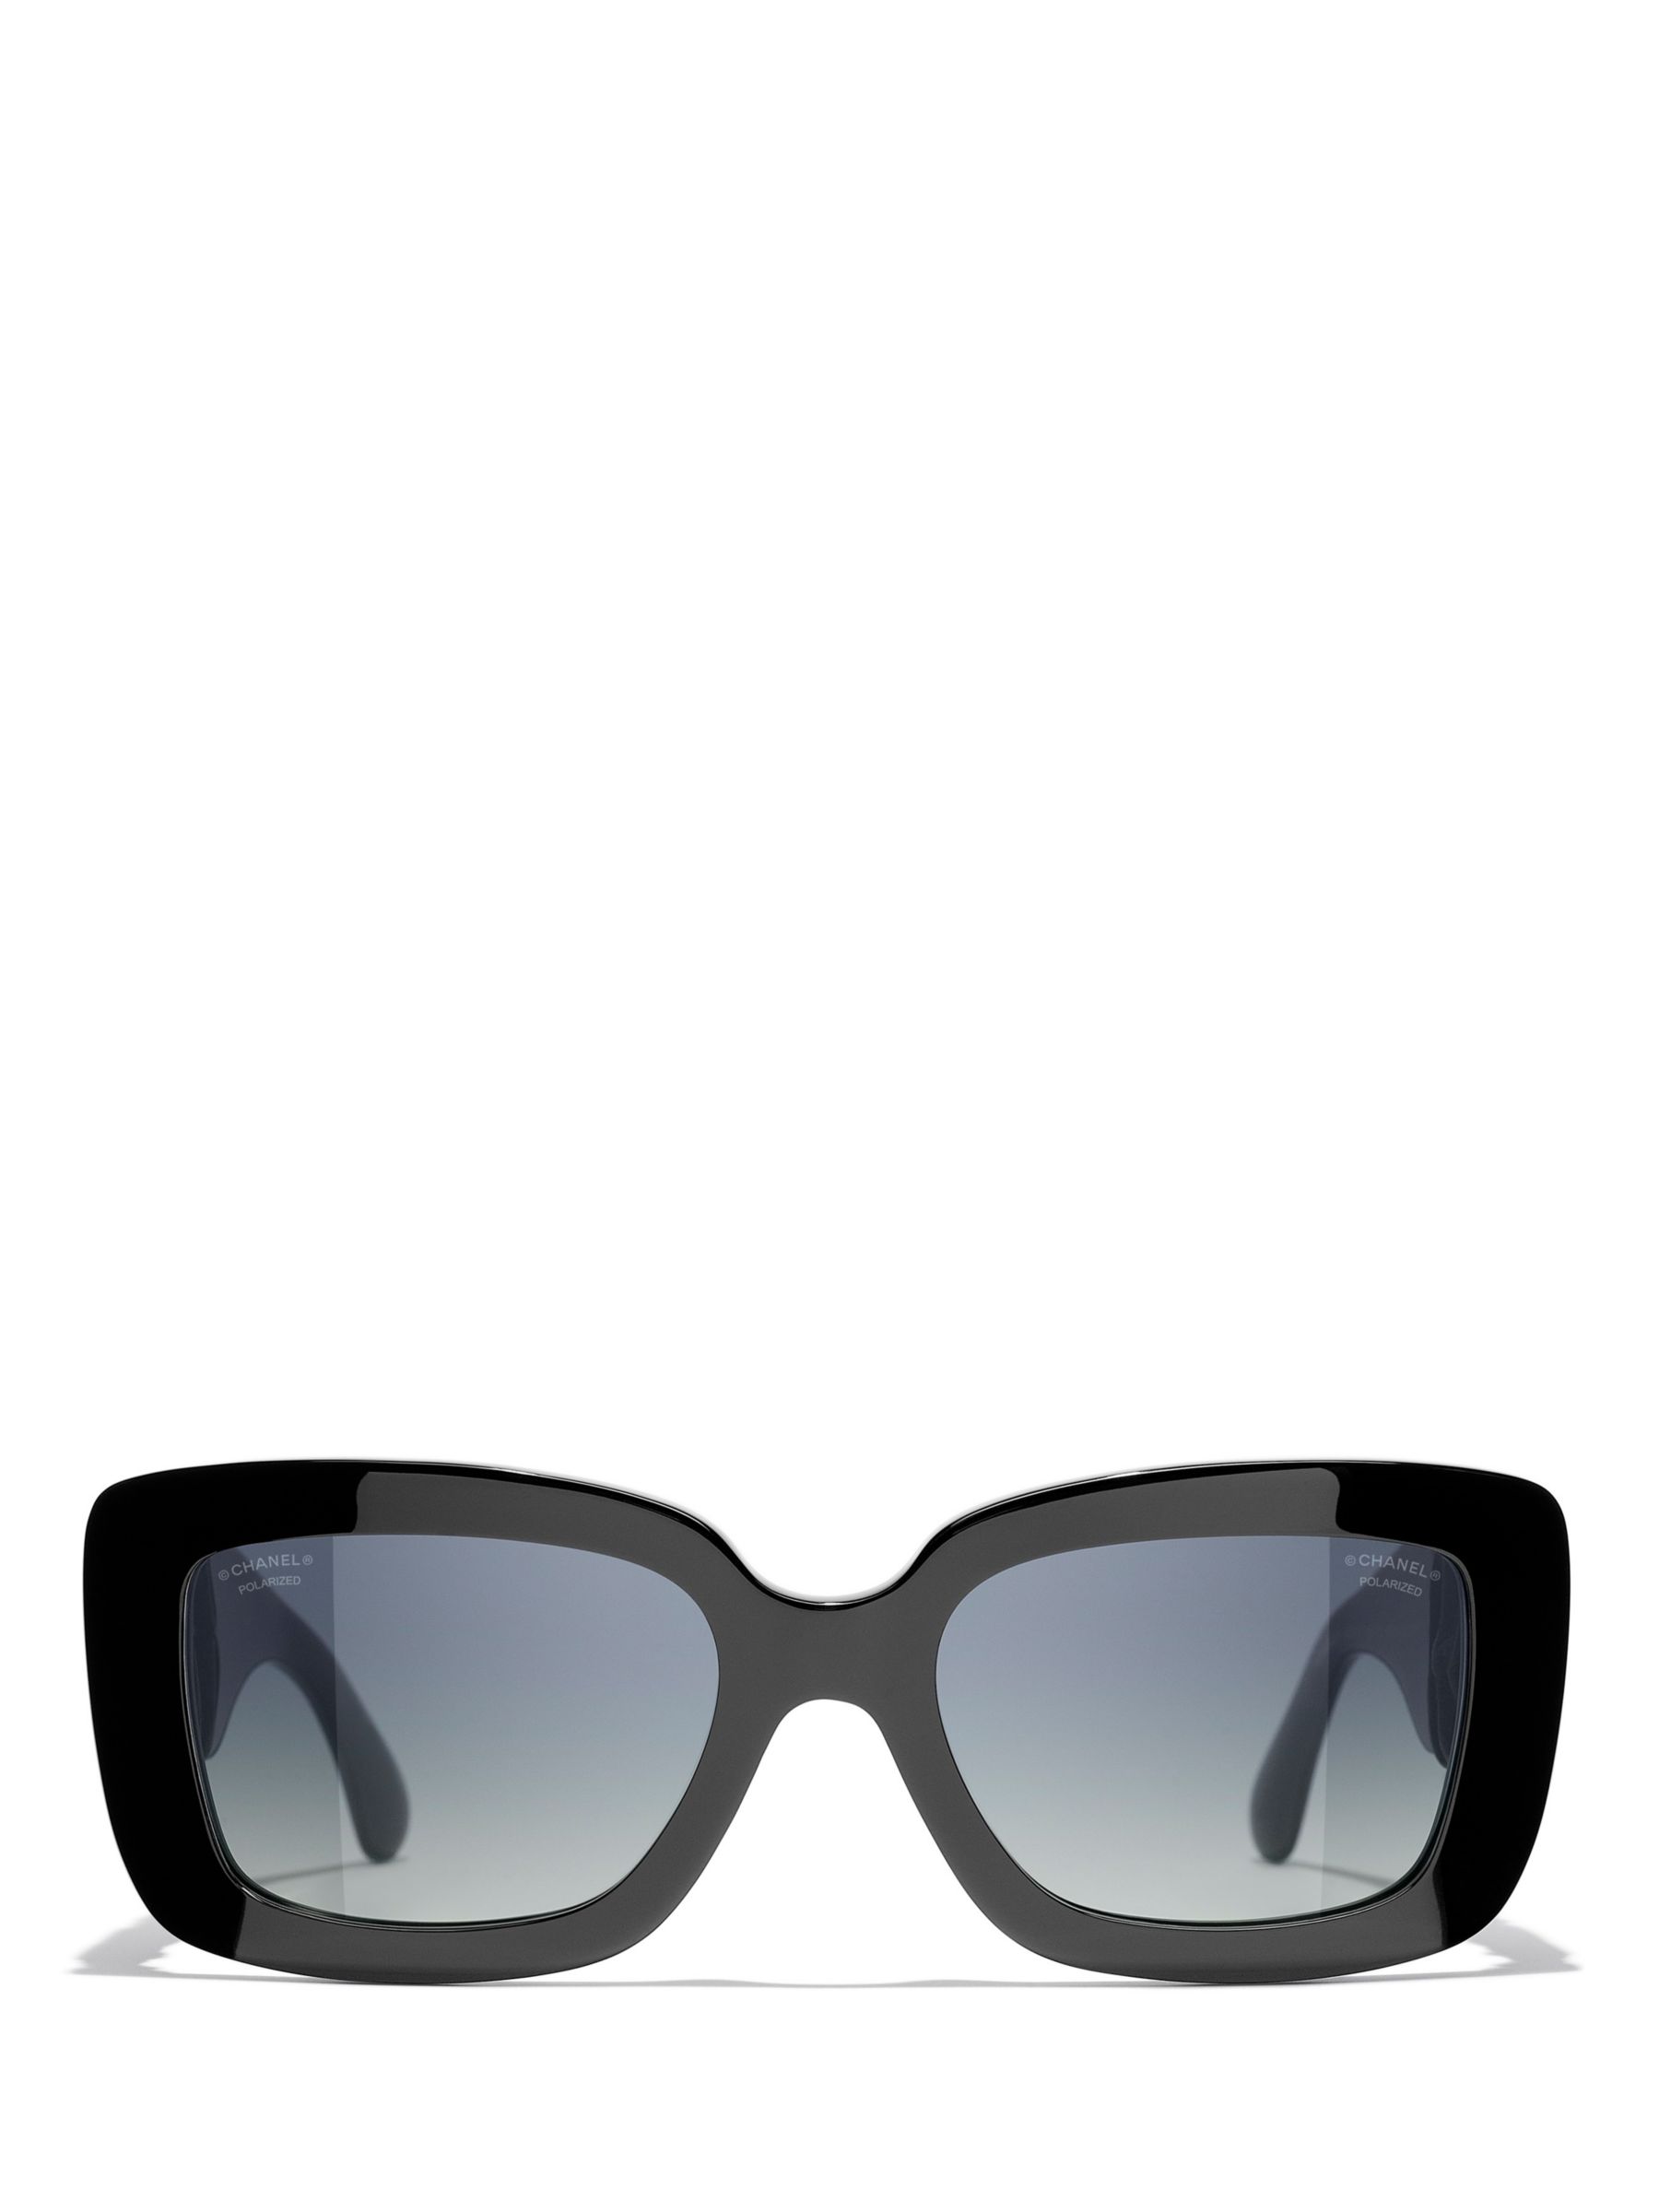 Buy CHANEL Rectangular Sunglasses CH5473Q Black/Blue Gradient Online at johnlewis.com